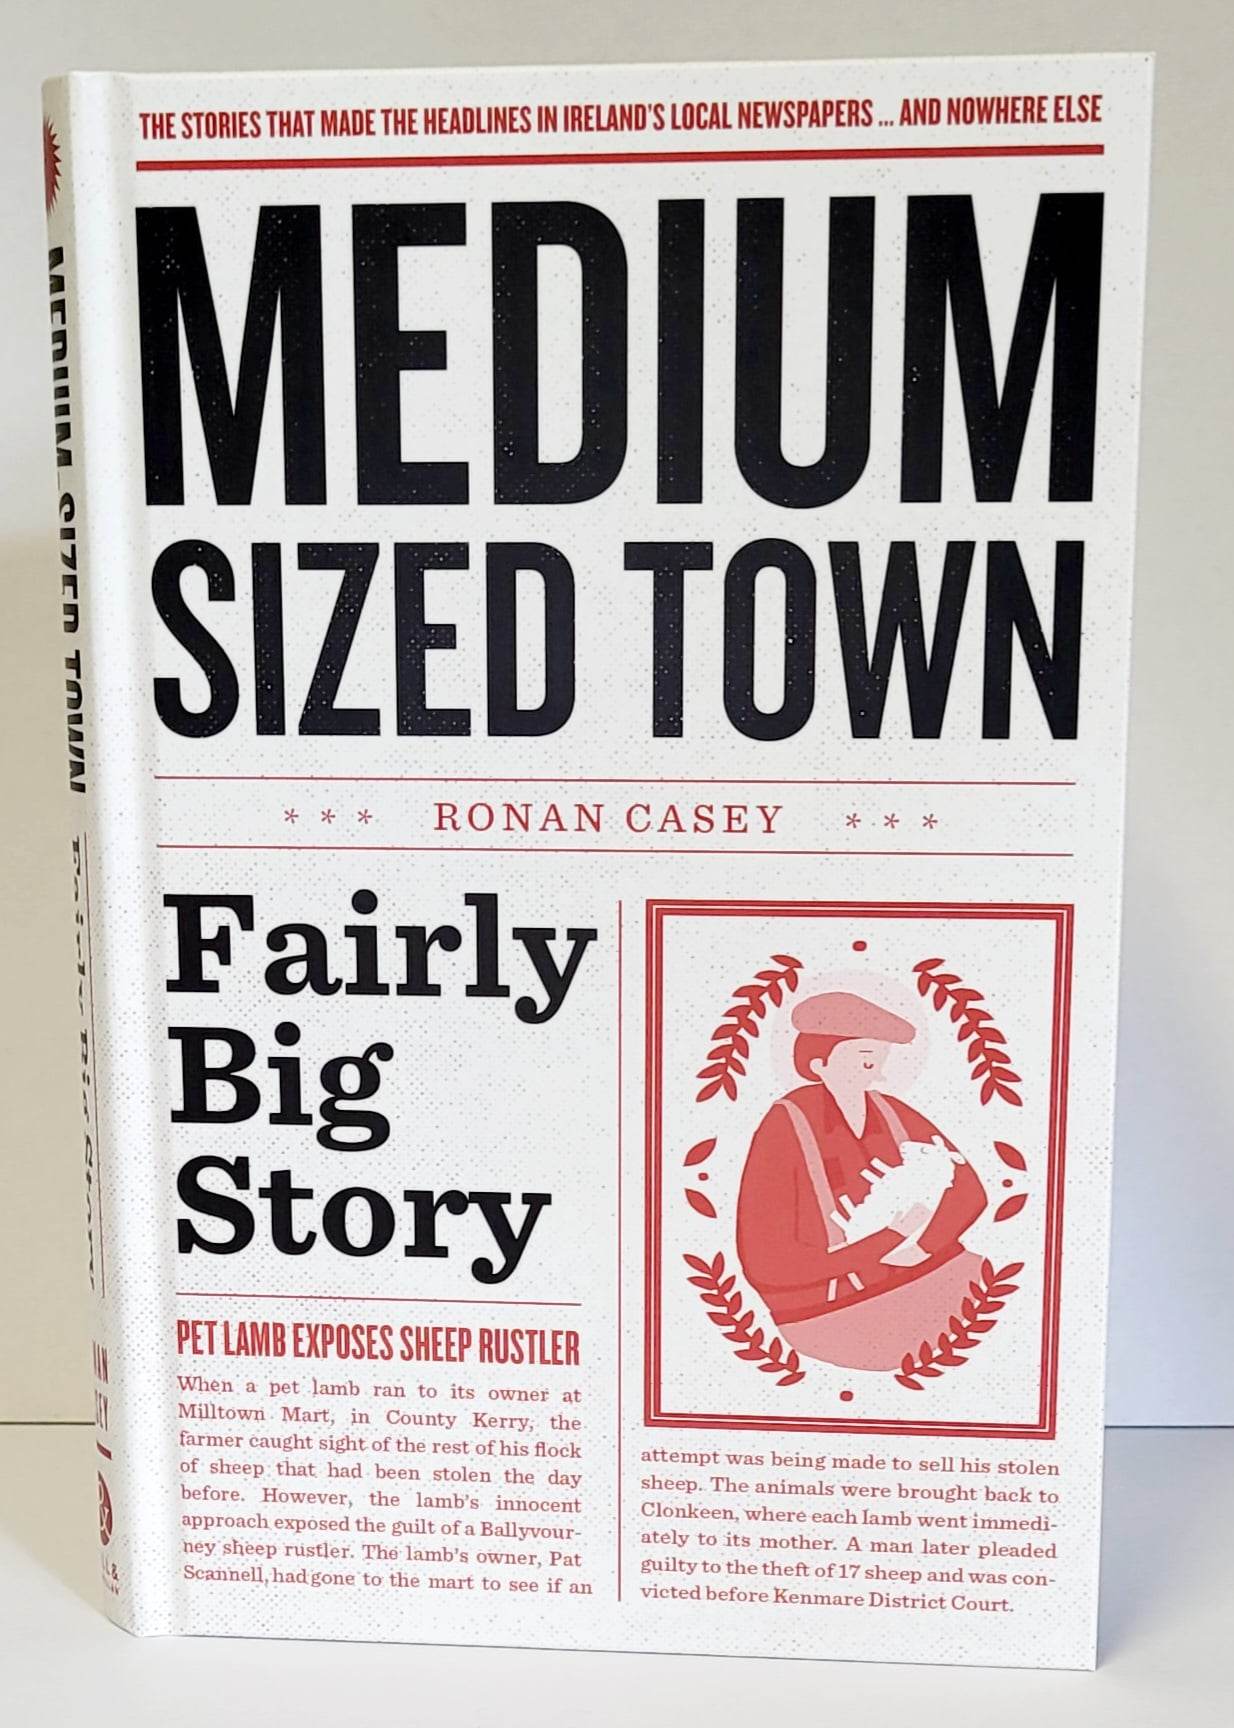 Medium - Sized Town Fairly Big Story by Ronan Casey